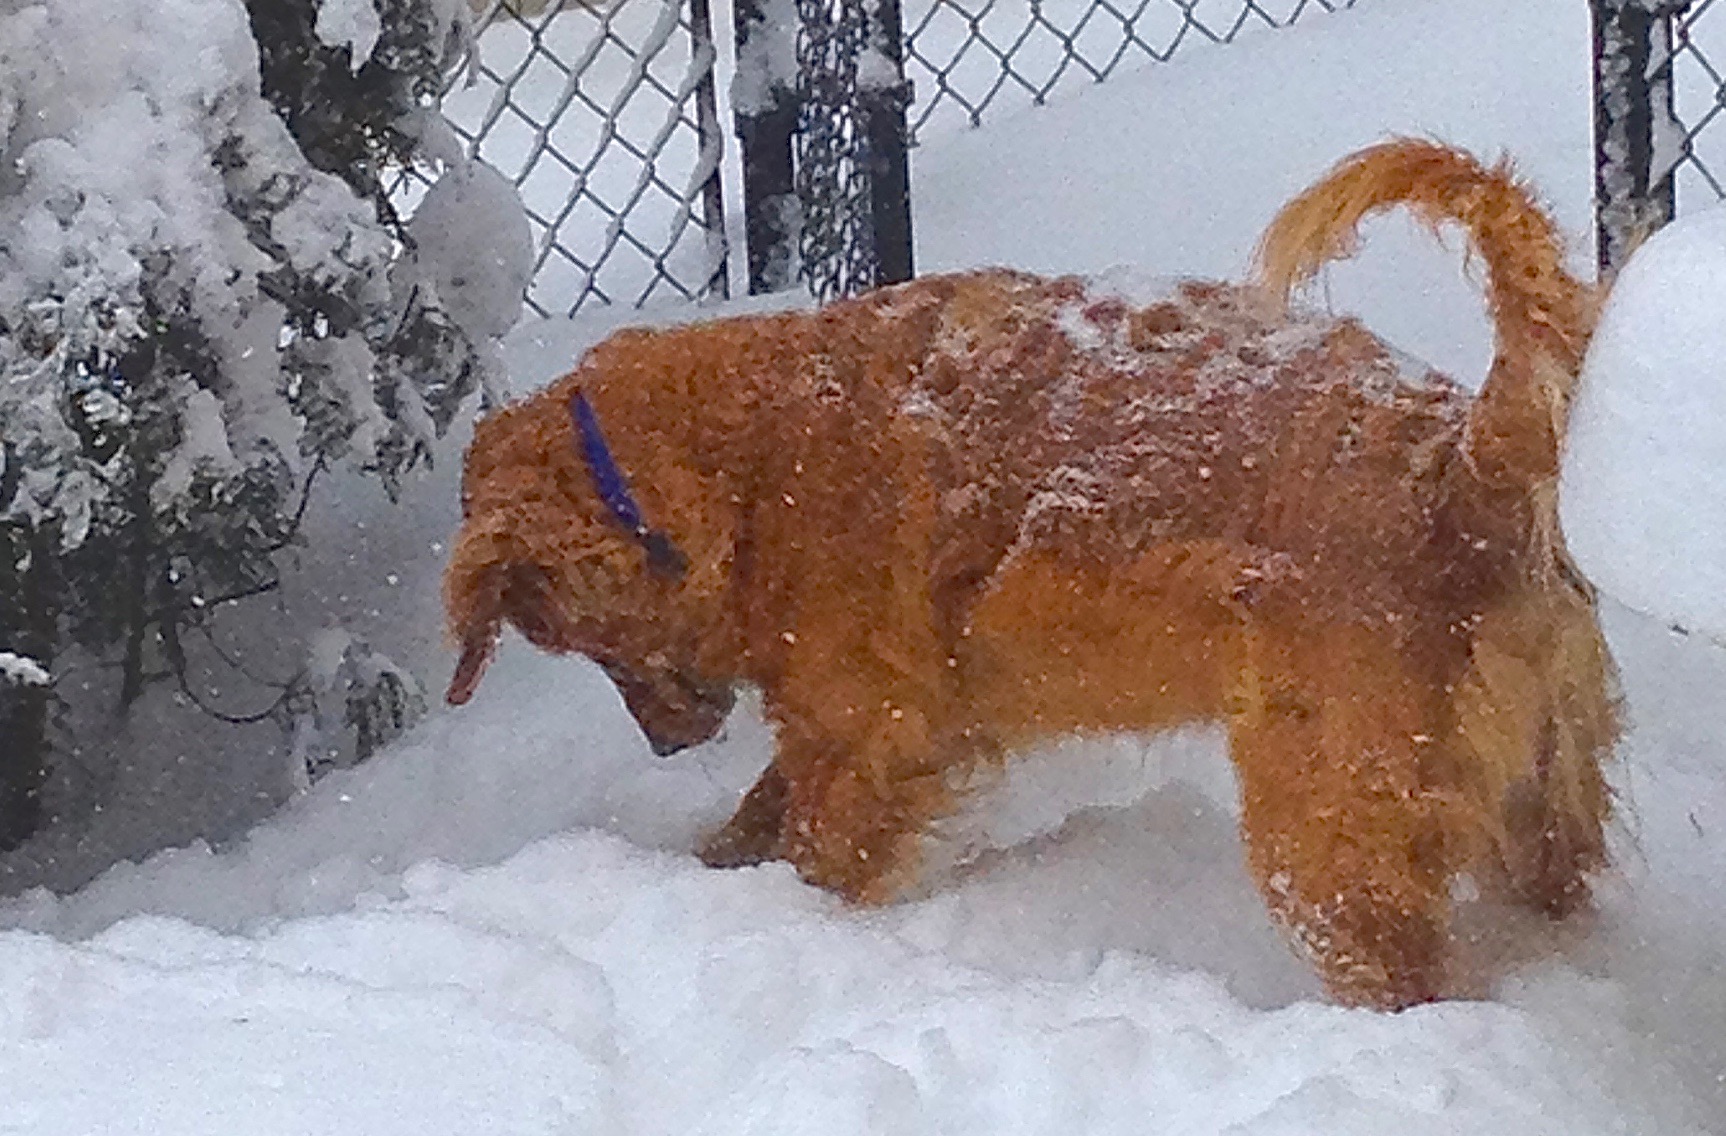 Snow Dog playing in snow | OakvilleNews.Org